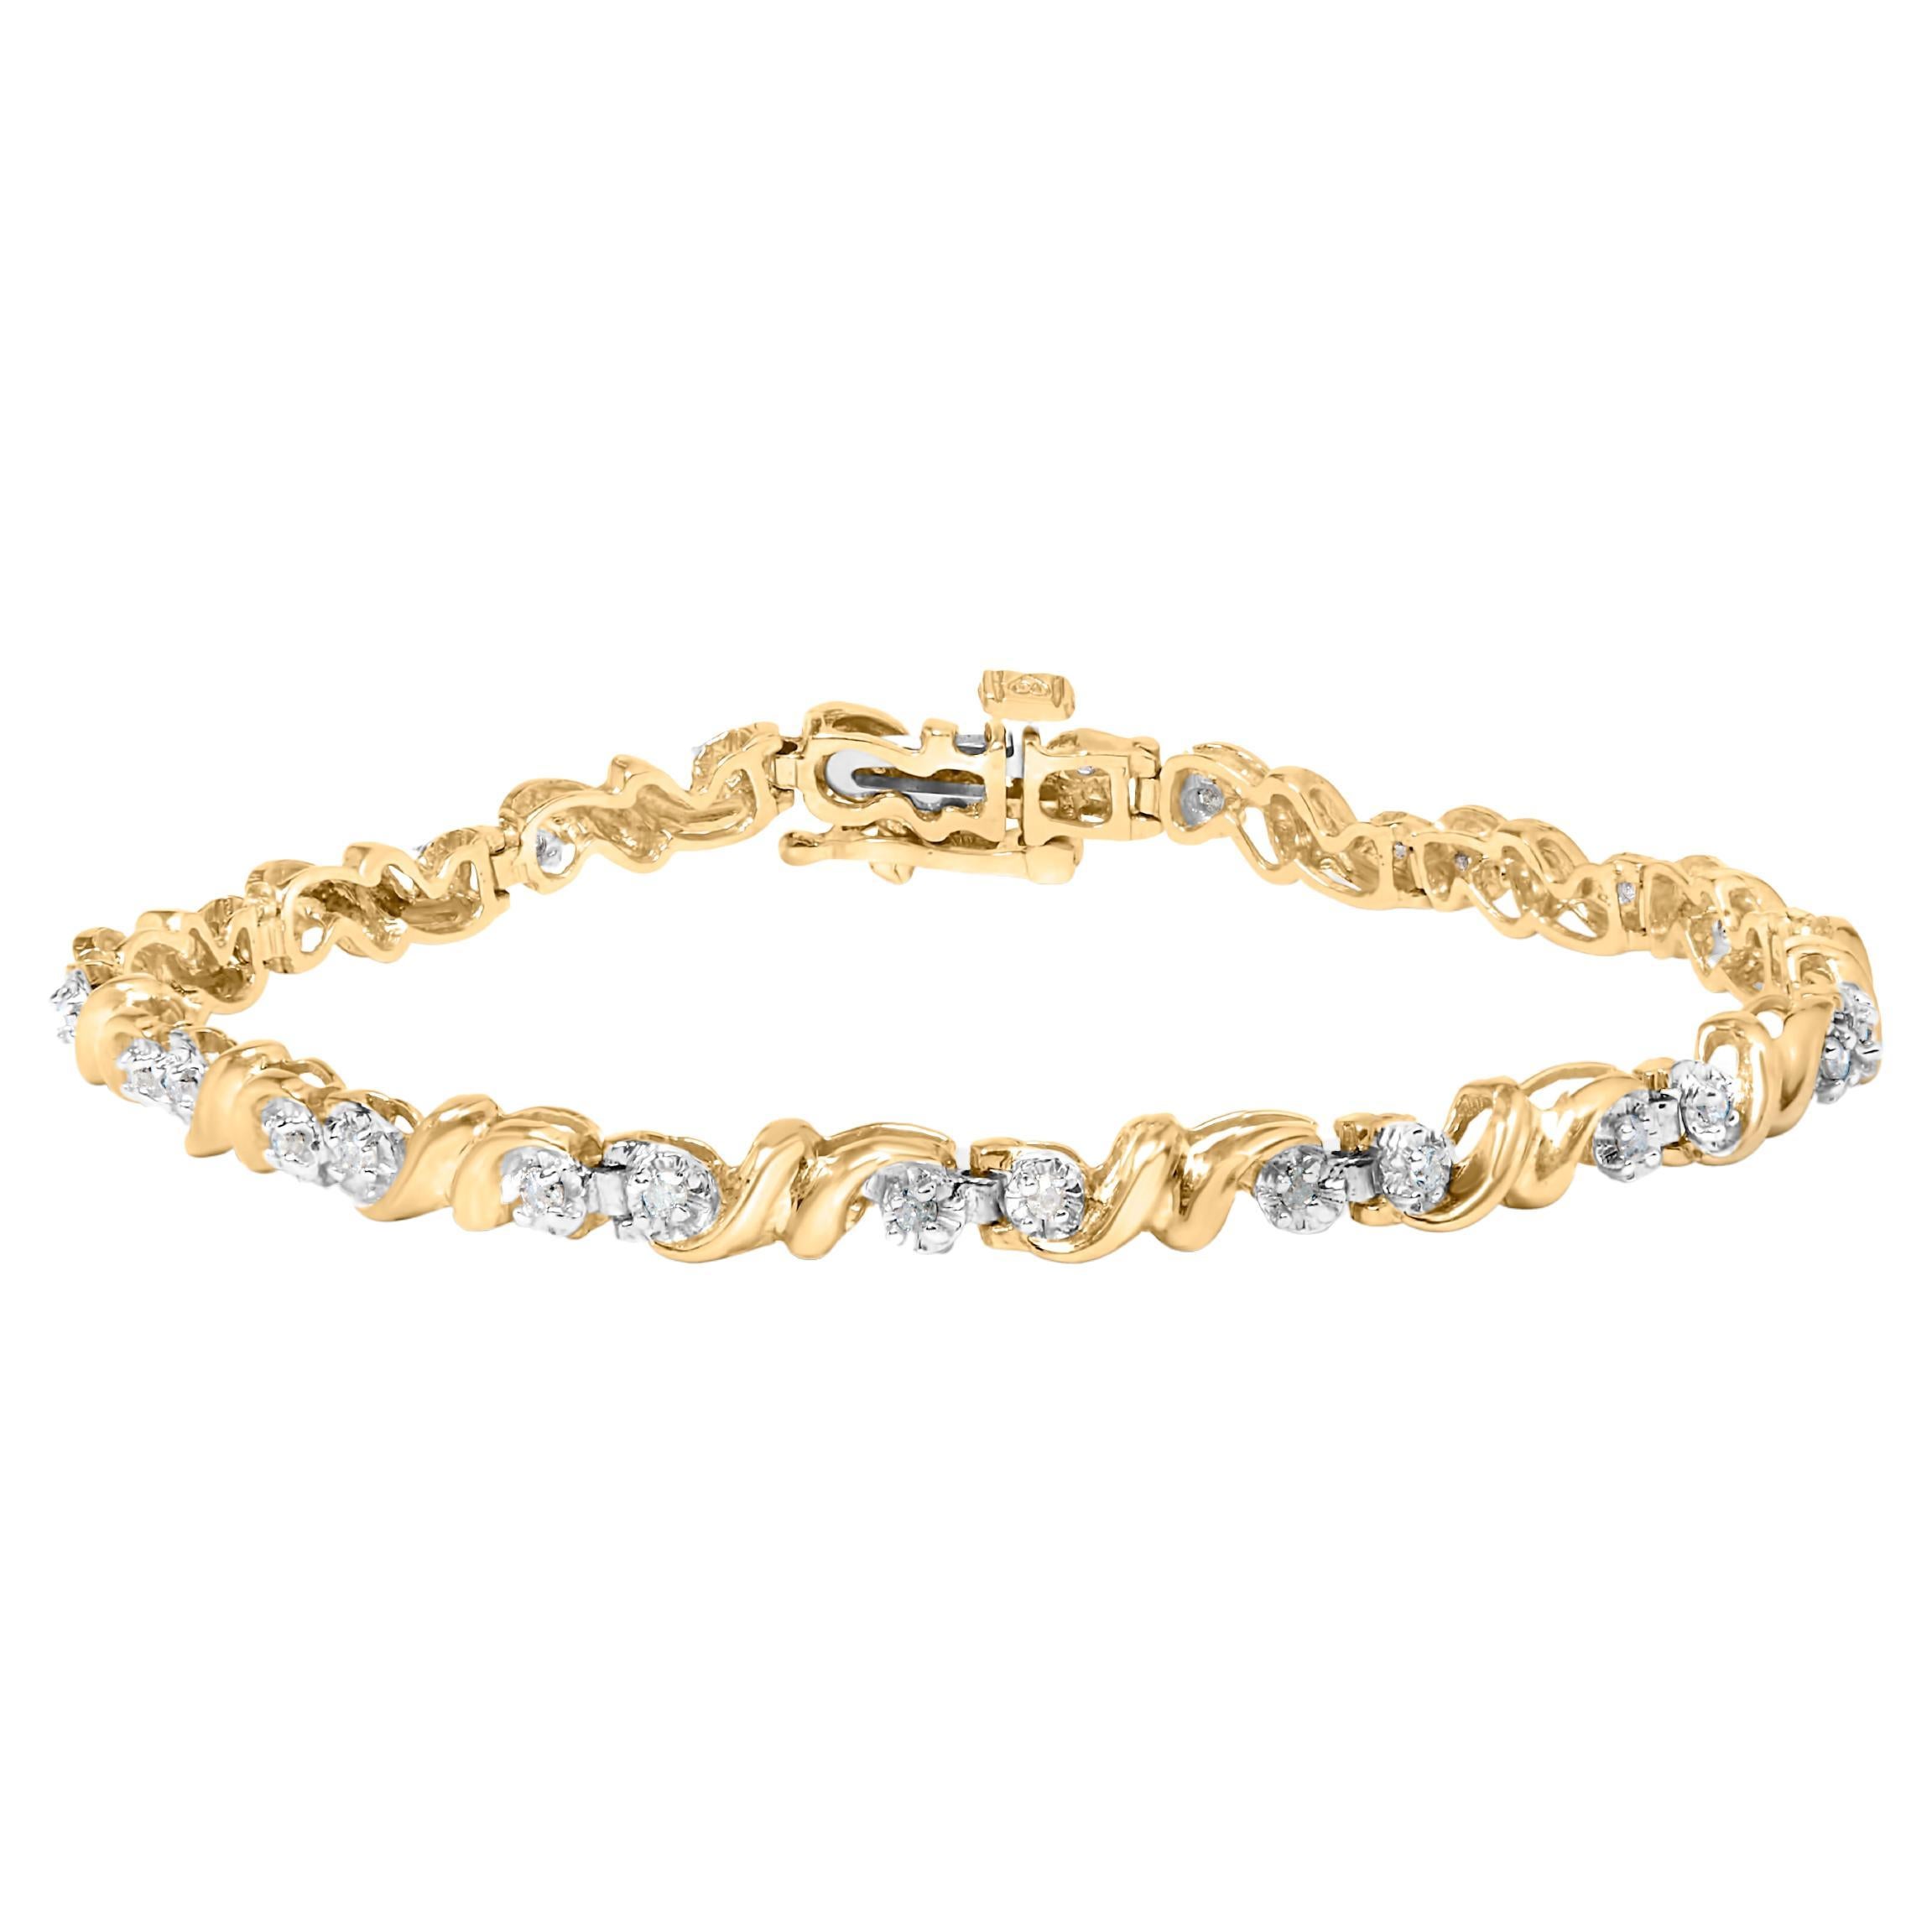 10K Yellow Gold over Silver 1/2 Carat Diamond Double Wave Link Tennis Bracelet